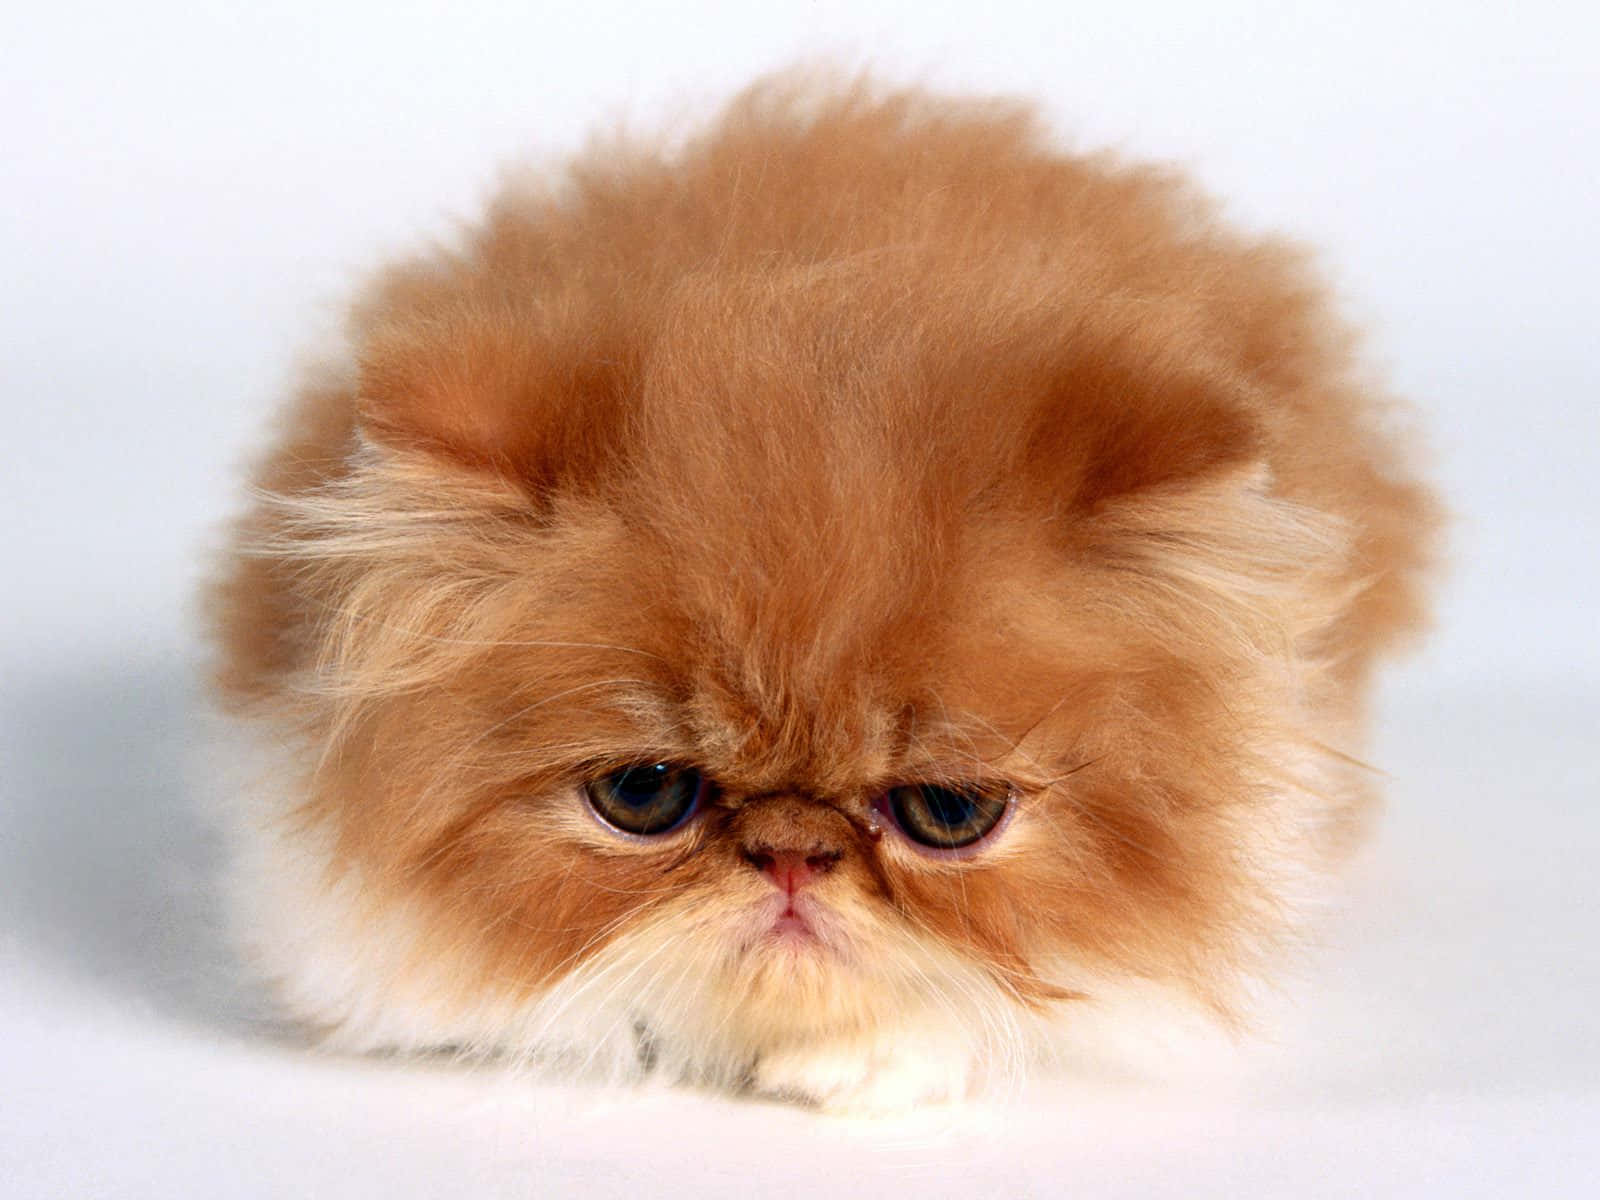 Sad Grumpy Kitten Cat Picture